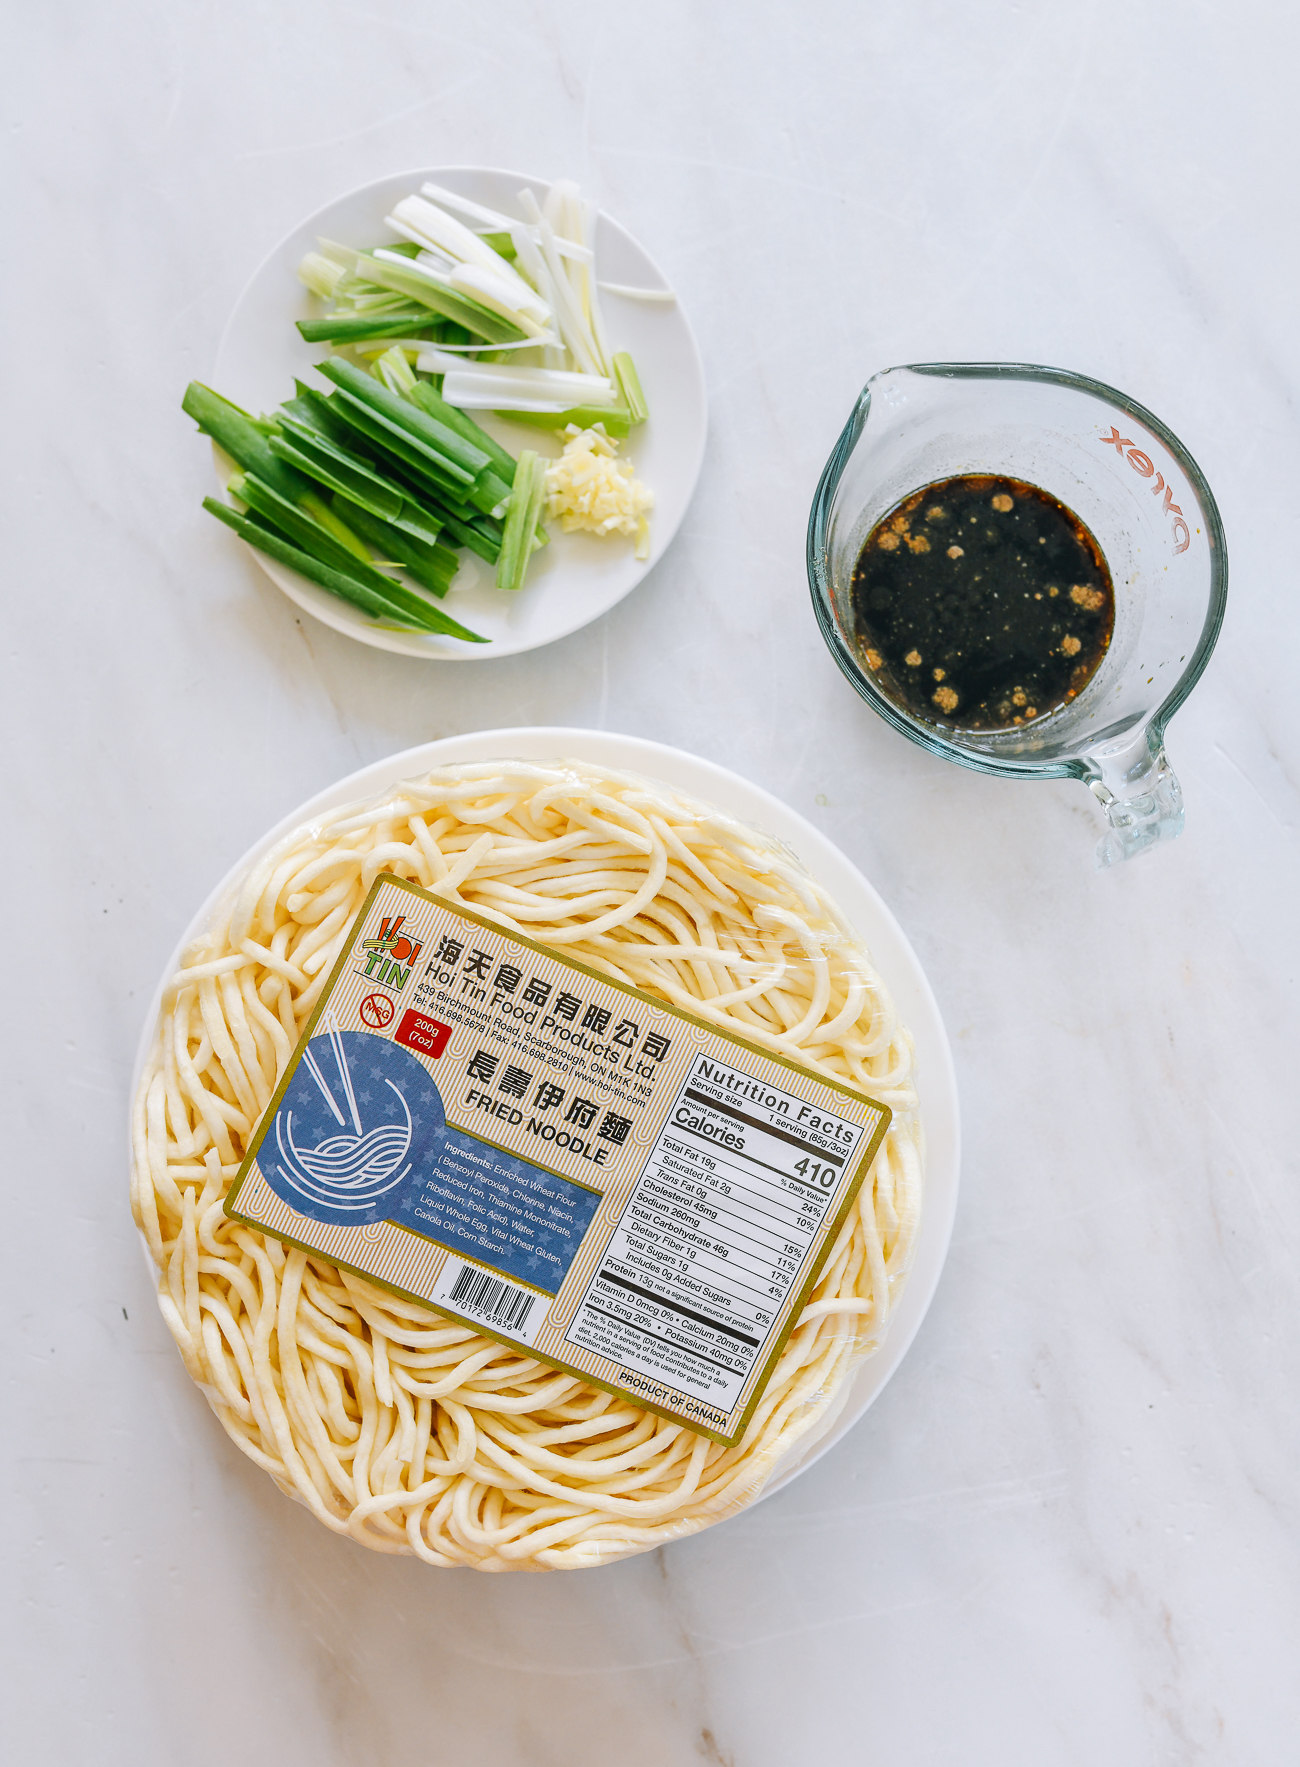 Ingredients to make yee mein AKA e-fu noodles